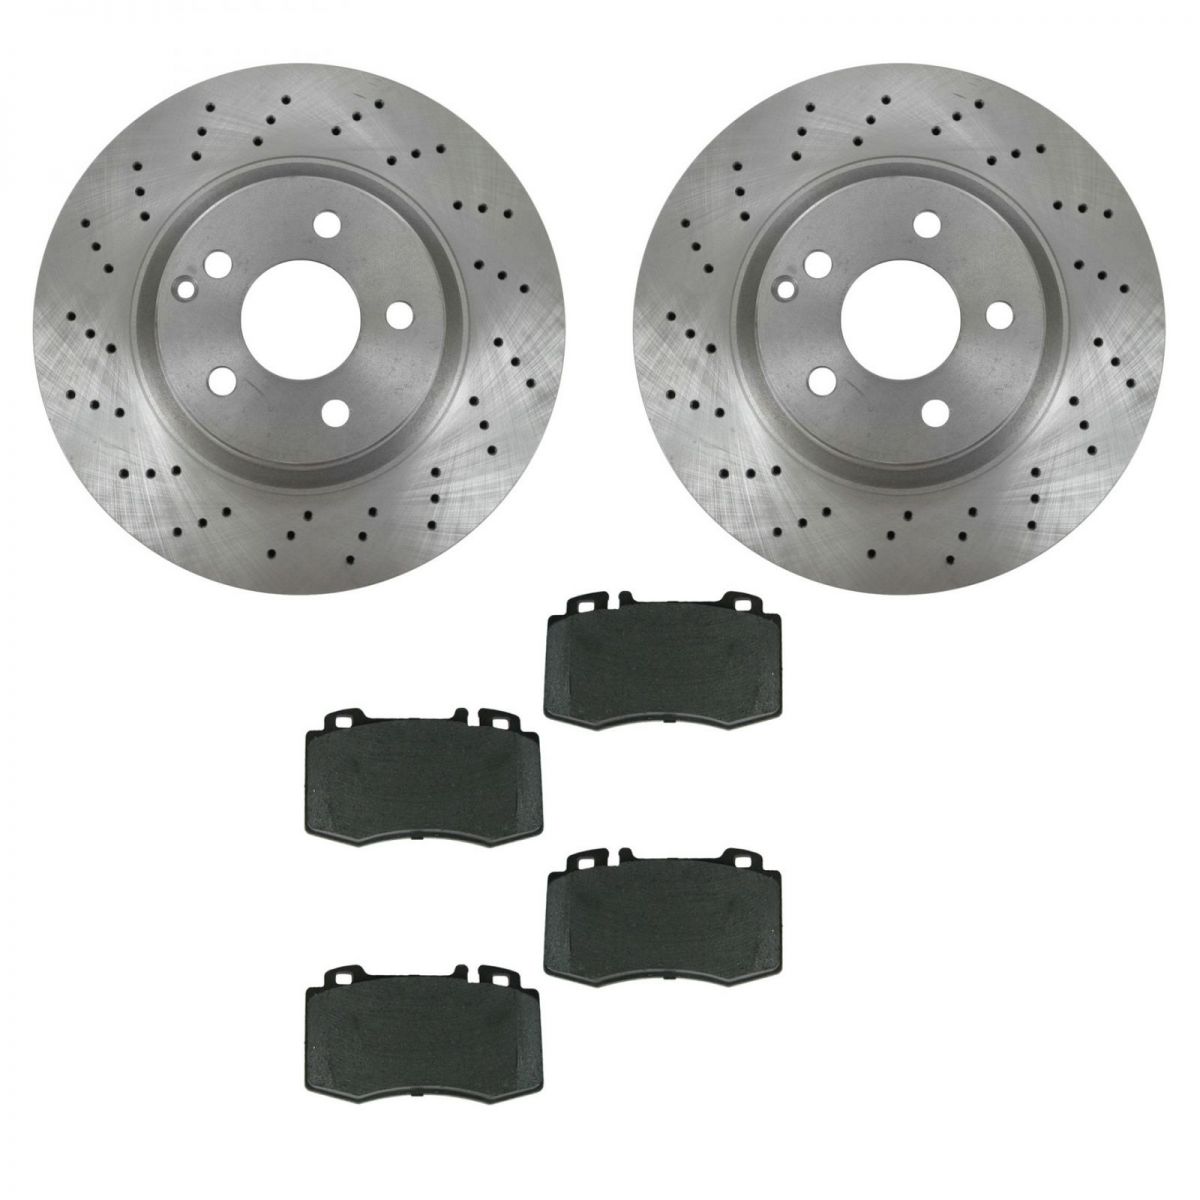 Mercedes benz rotors and pads #5